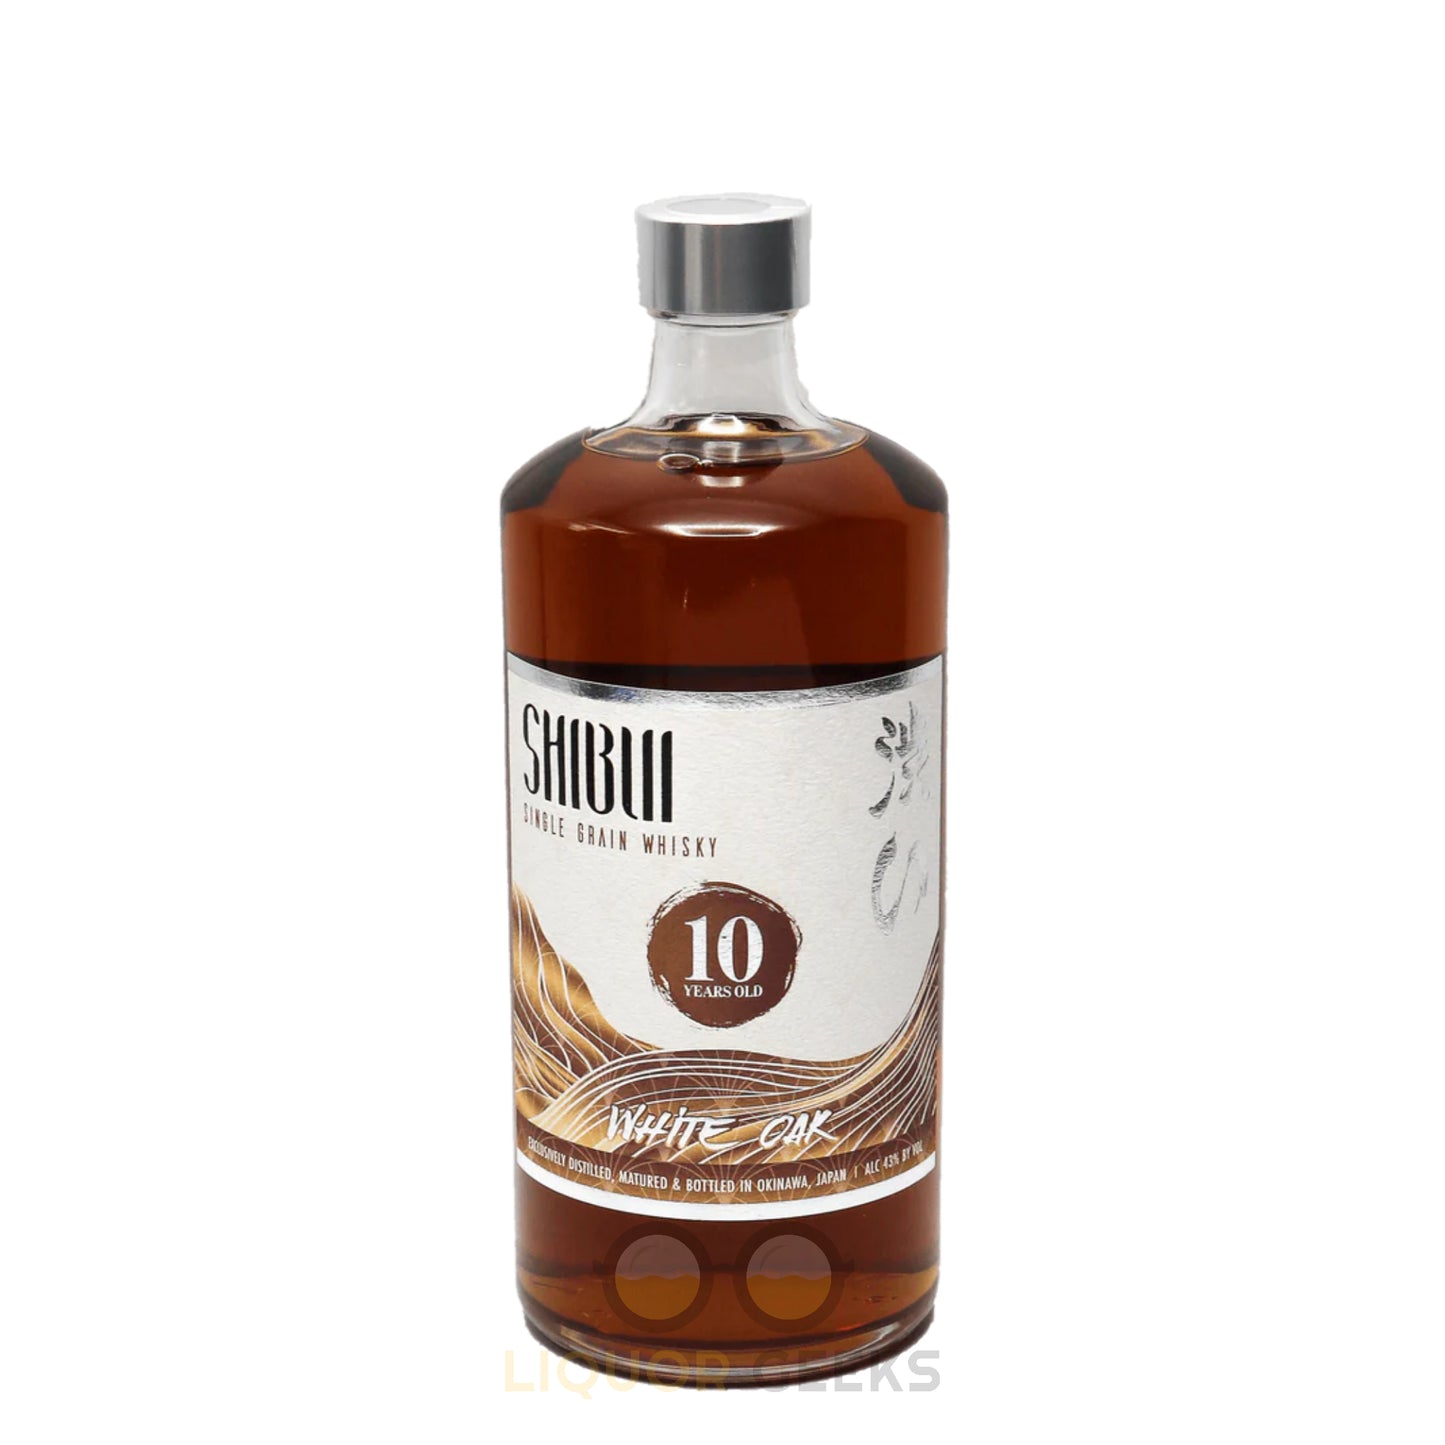 Shibui Single Grain Whisky White Oak 10 Year - Liquor Geeks